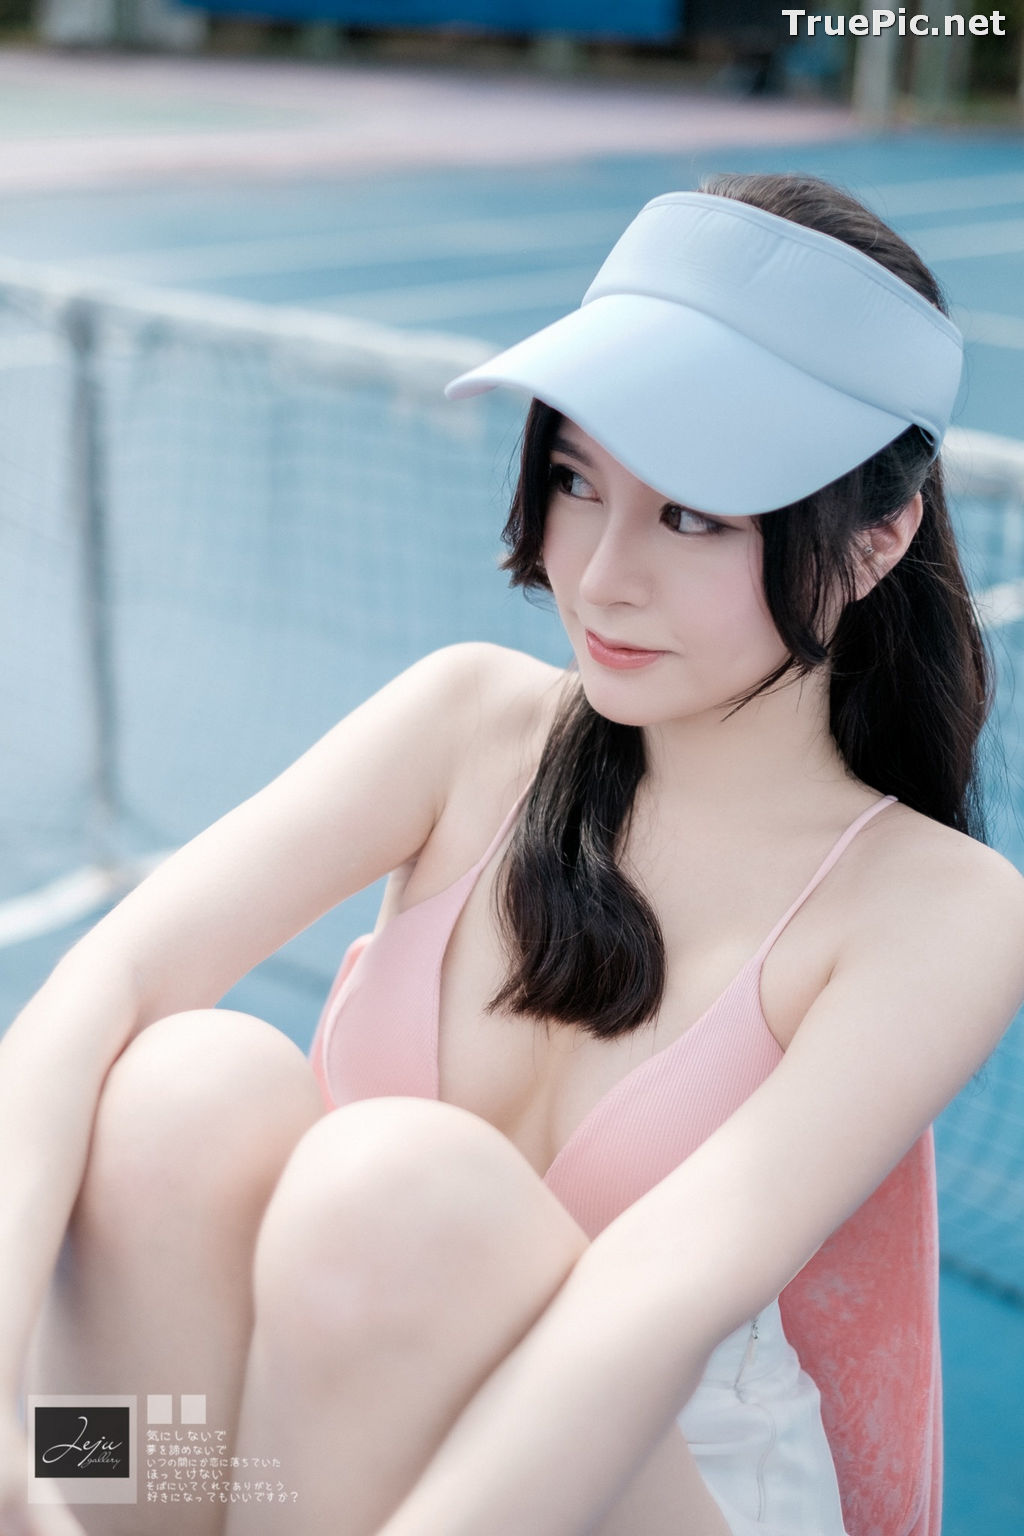 Image Thailand Model - Sarutaya Tawechaisupaphong - Hot Girl Tennis - TruePic.net - Picture-10